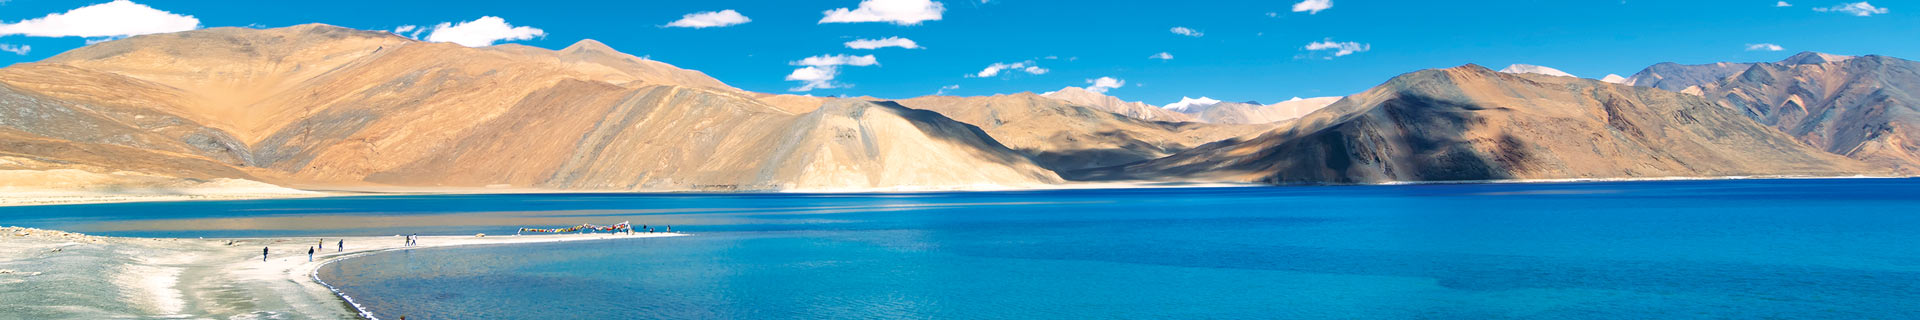 tourism of ladakh